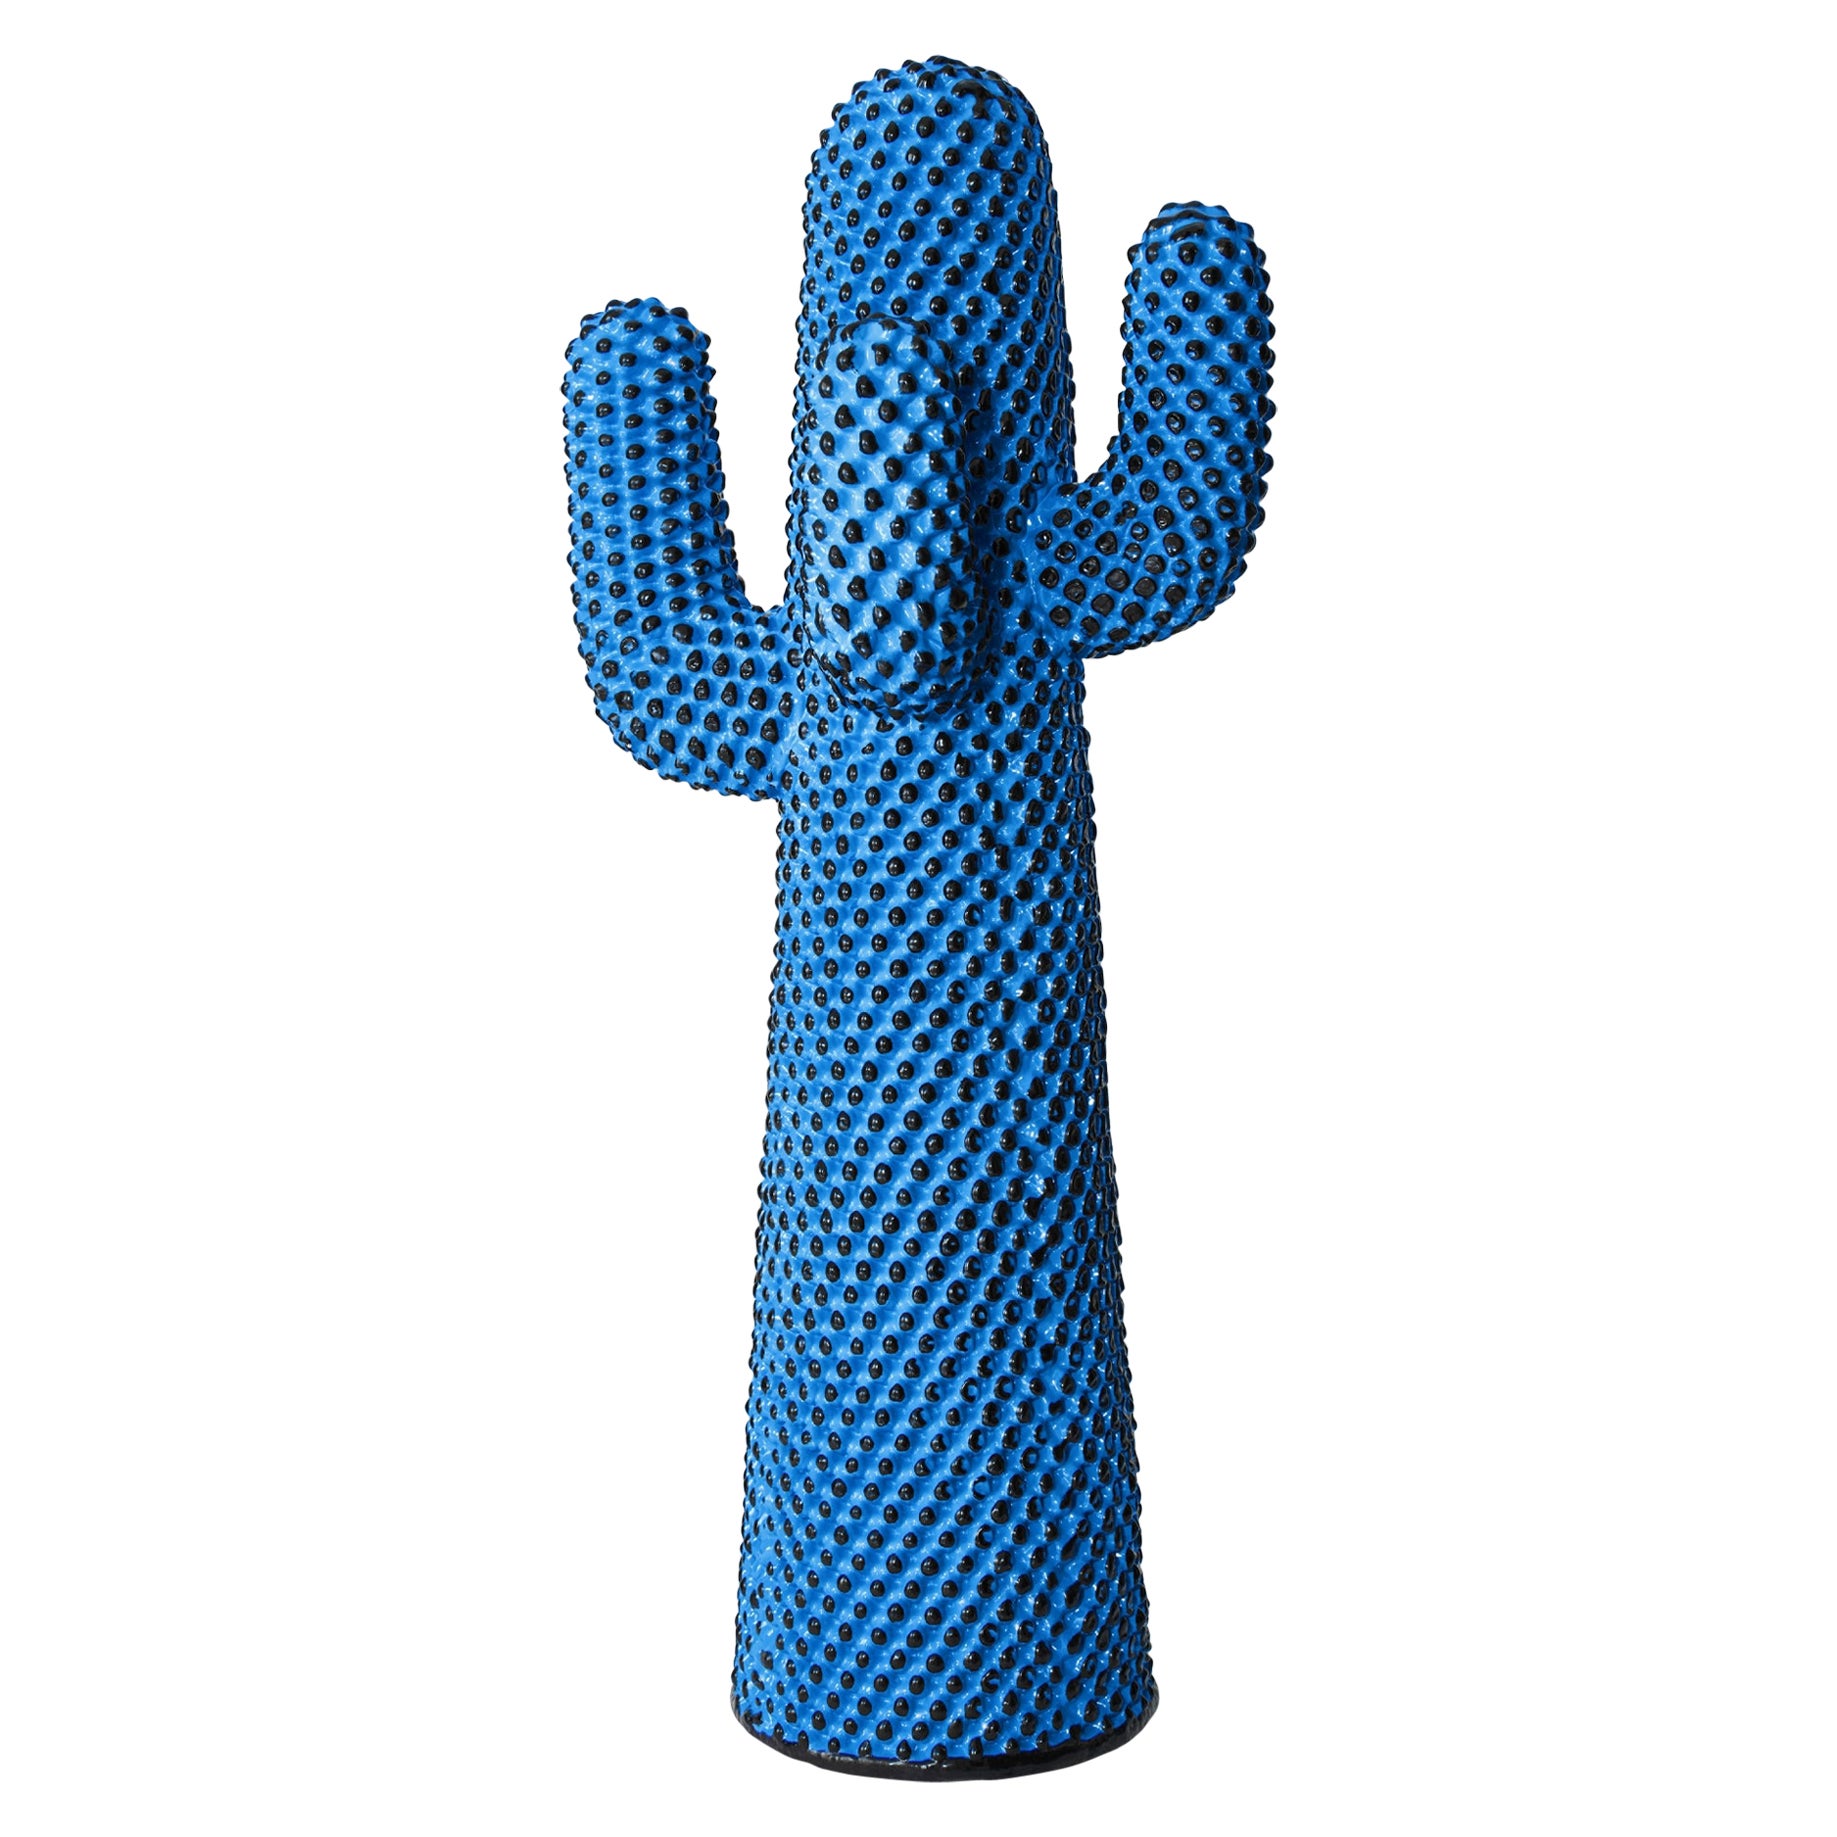 Andy’s Cactus Blue Coat Racks Sculpture by Andy Warhol x Gufram